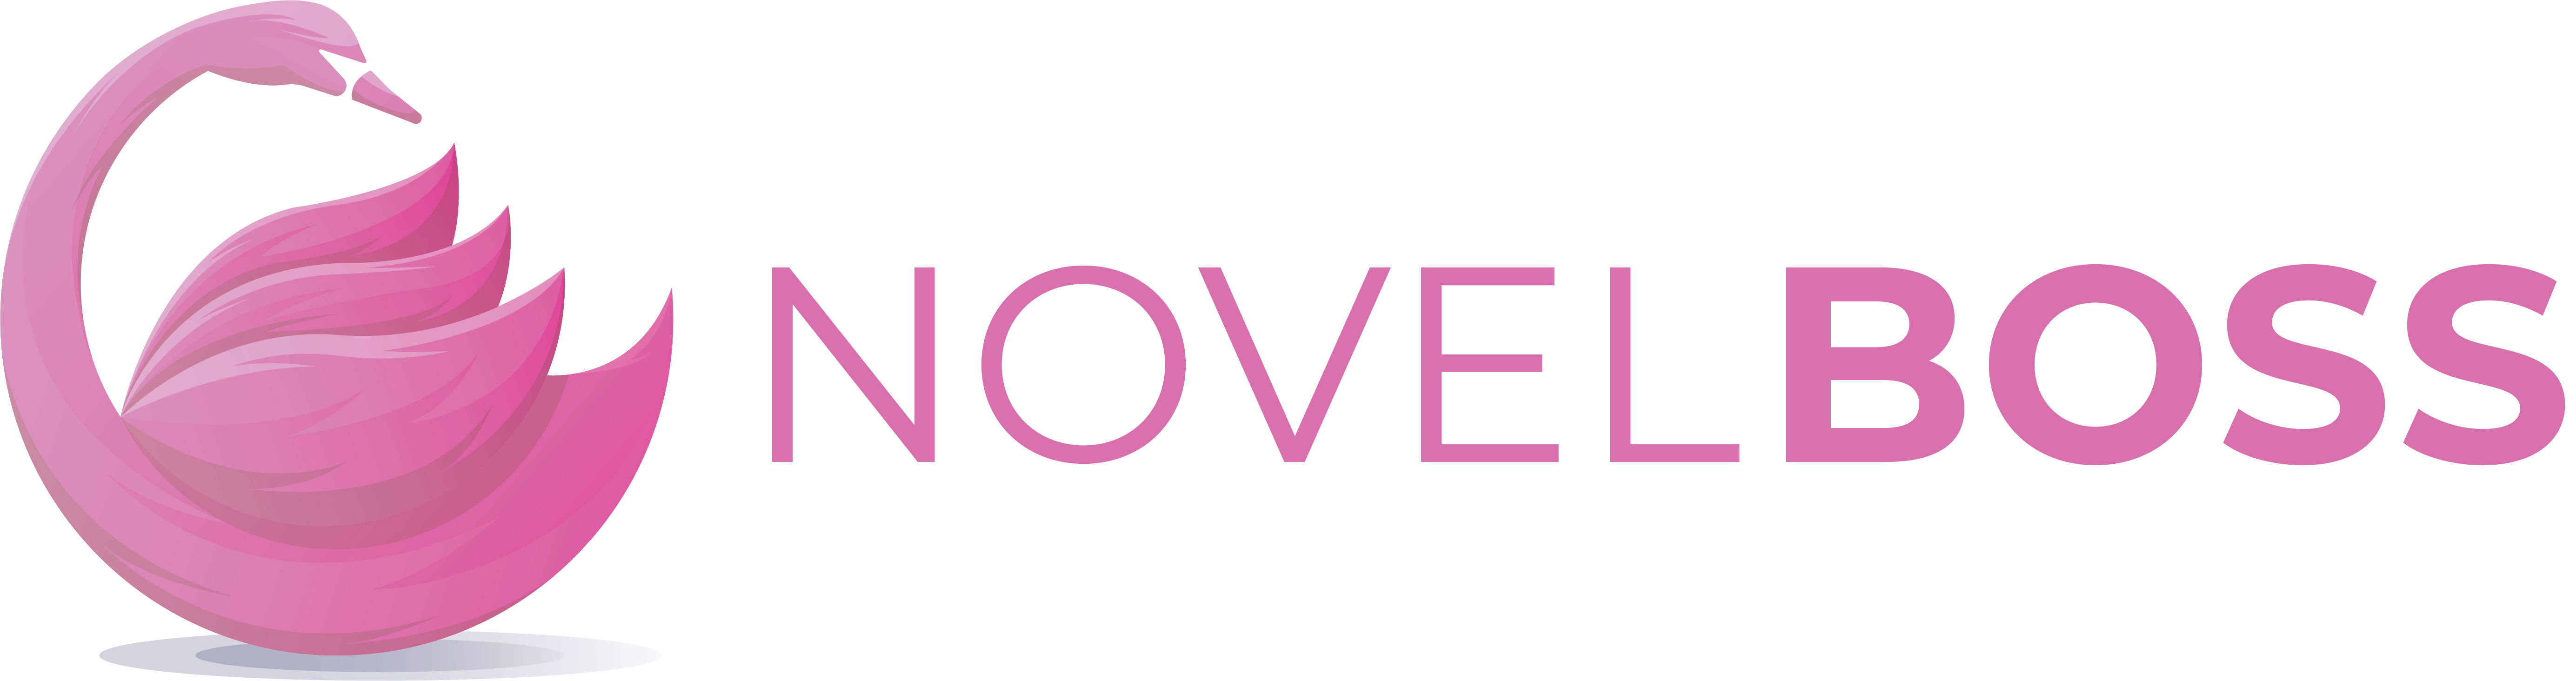 Novel Boss Logo Pink